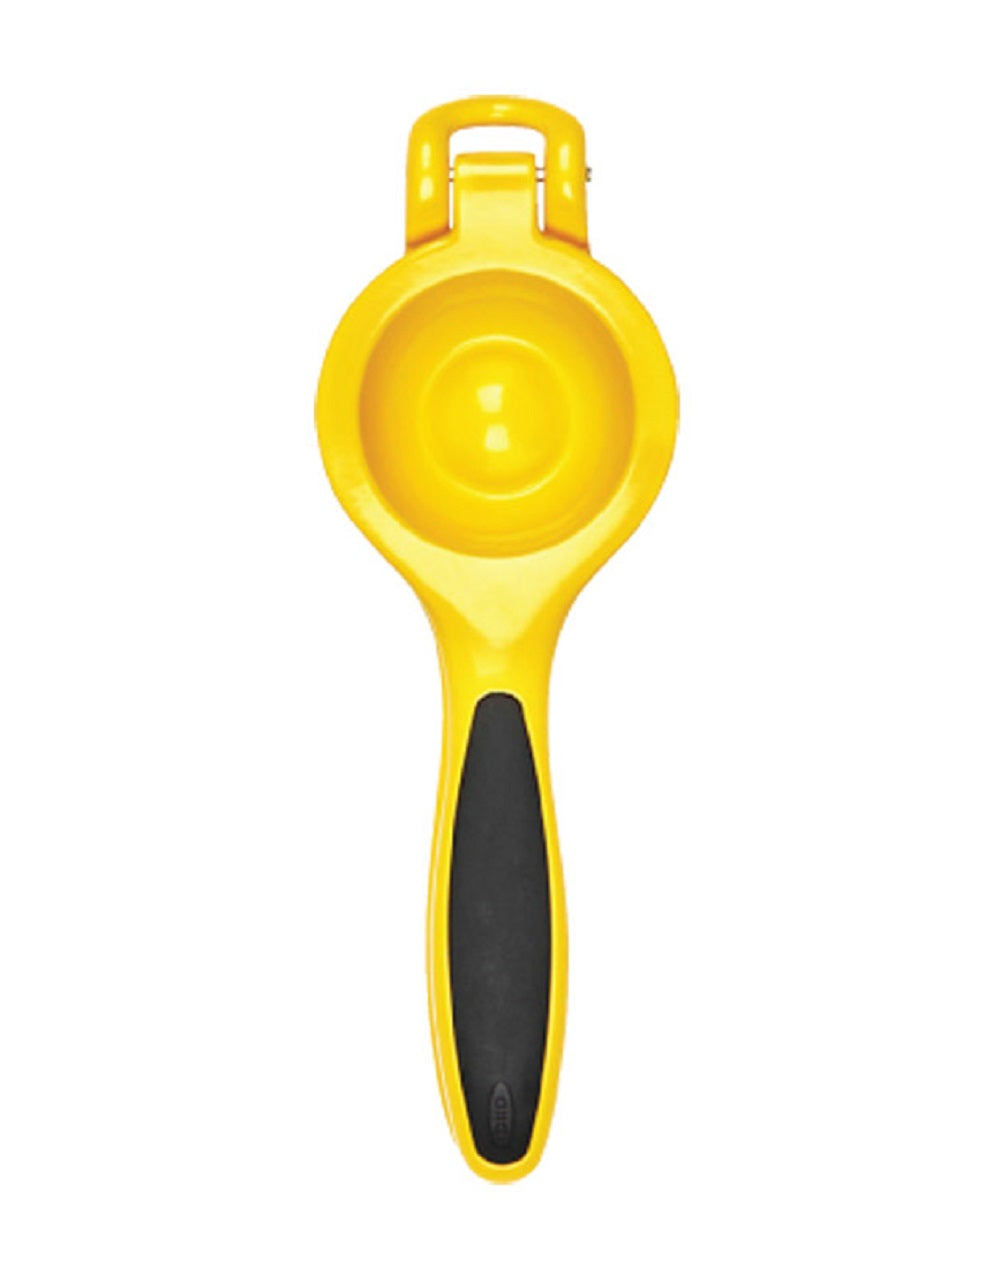 OXO 1057962 Good Grips Citrus Juicer, Yellow/Black